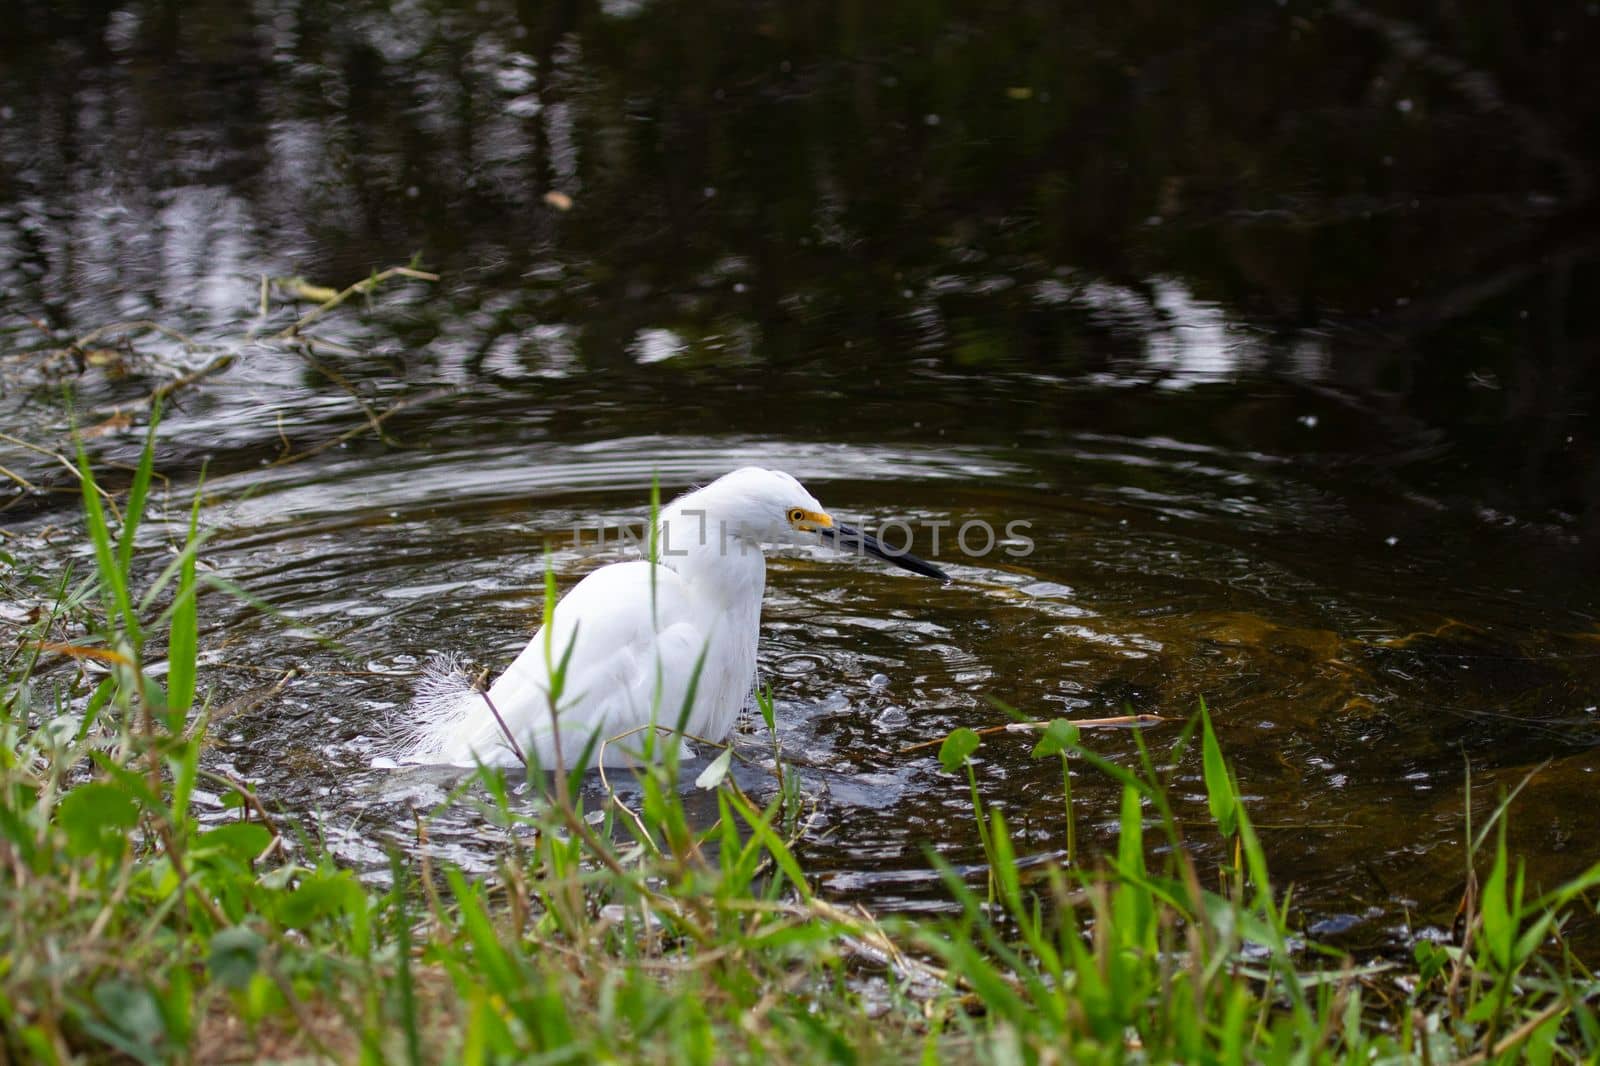 Snowy egret wading in water, found in Everglades by Granchinho